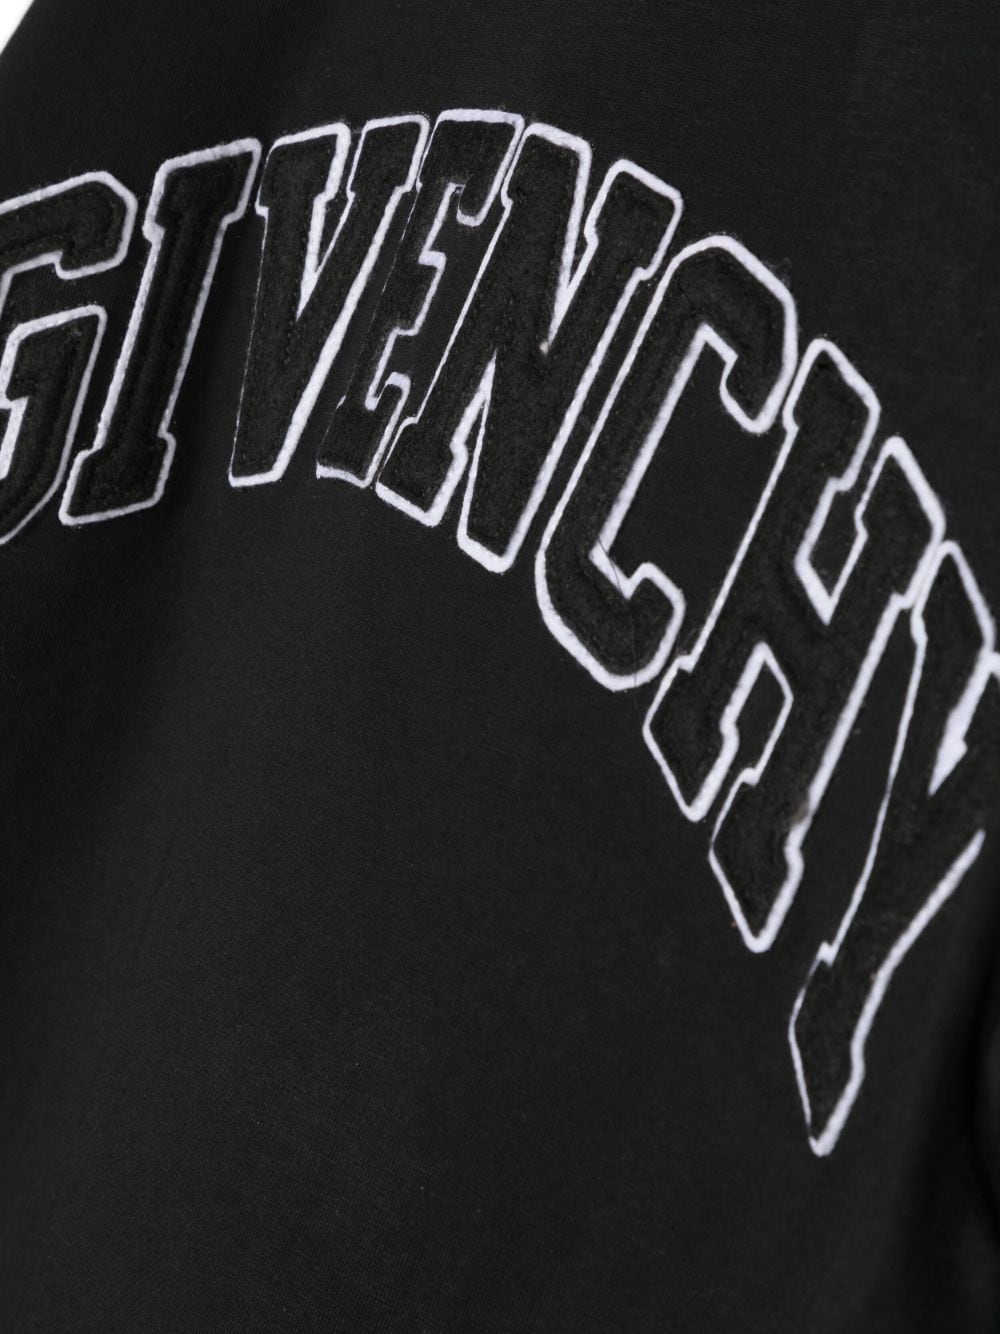 Black cotton jersey boy GIVENCHY t-shirt | Carofiglio Junior